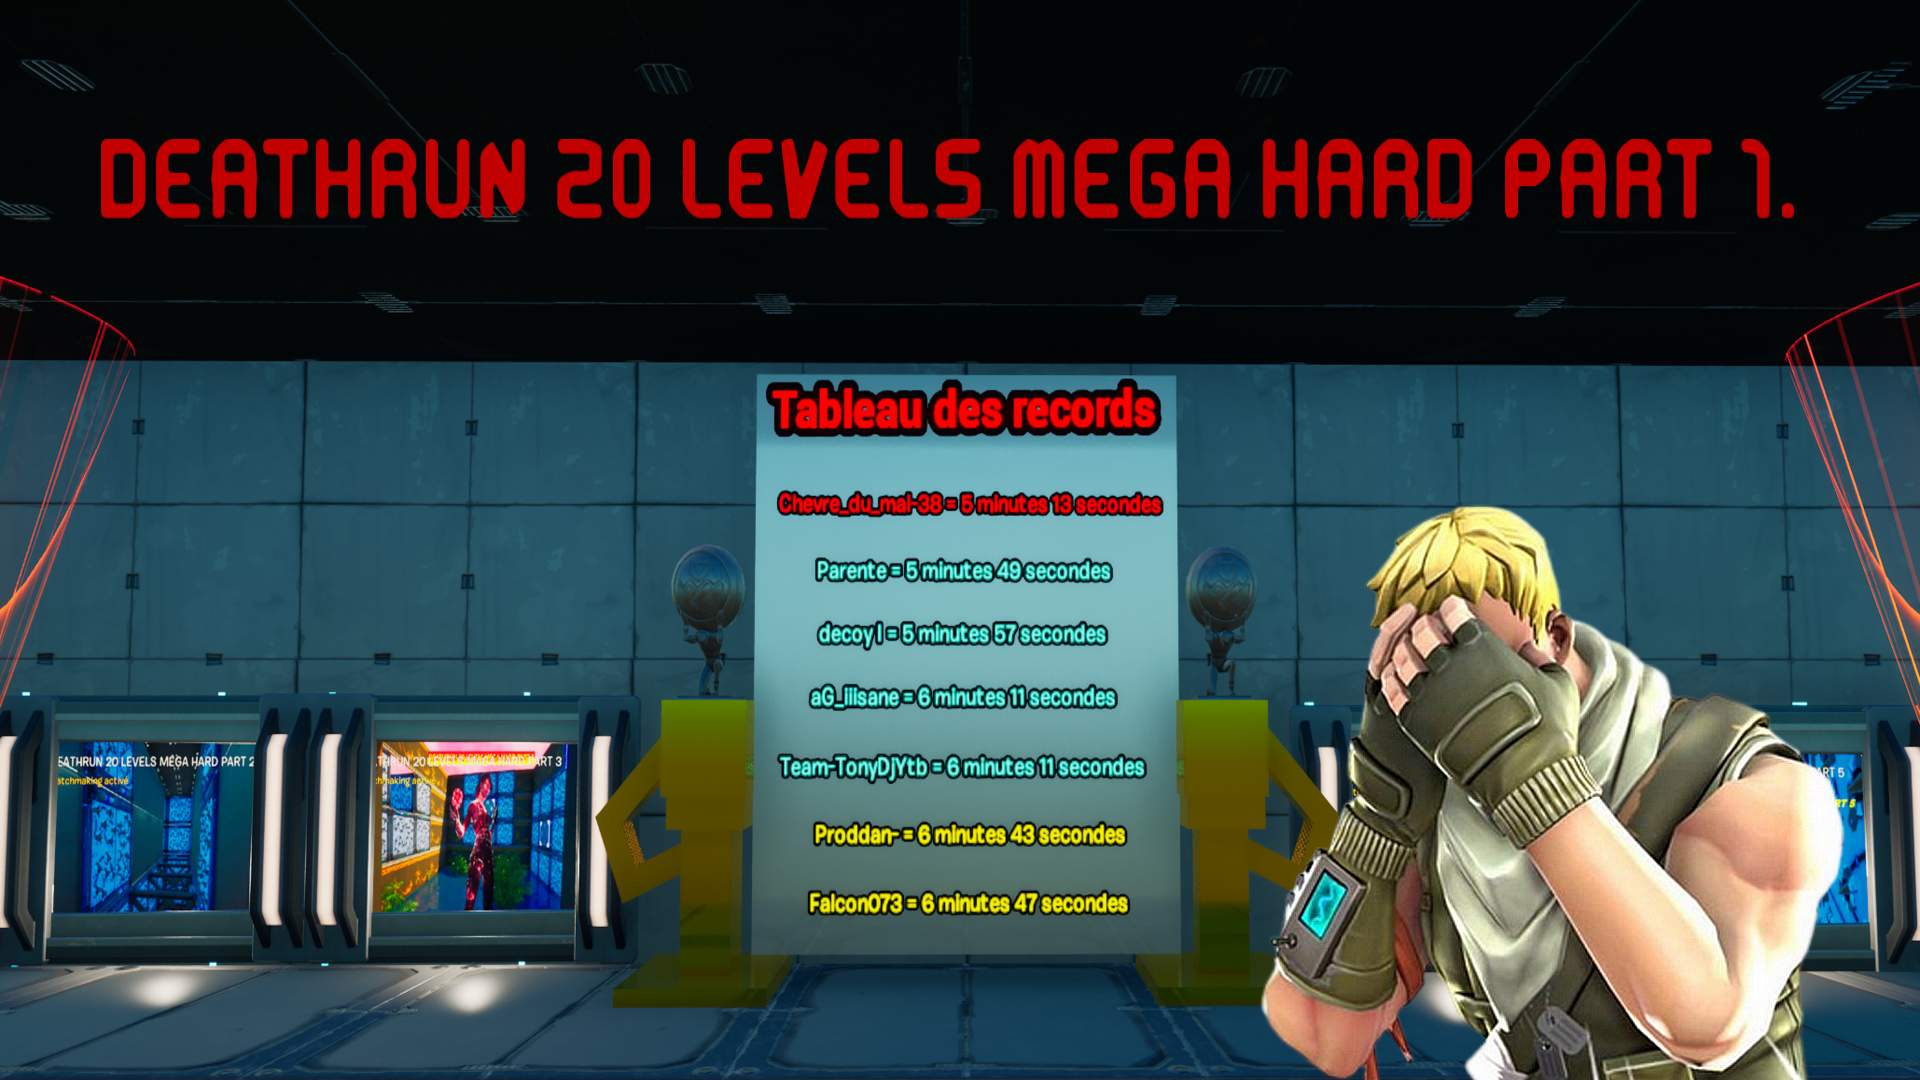 Deathrun 20 Levels Mega Hard Part 1.